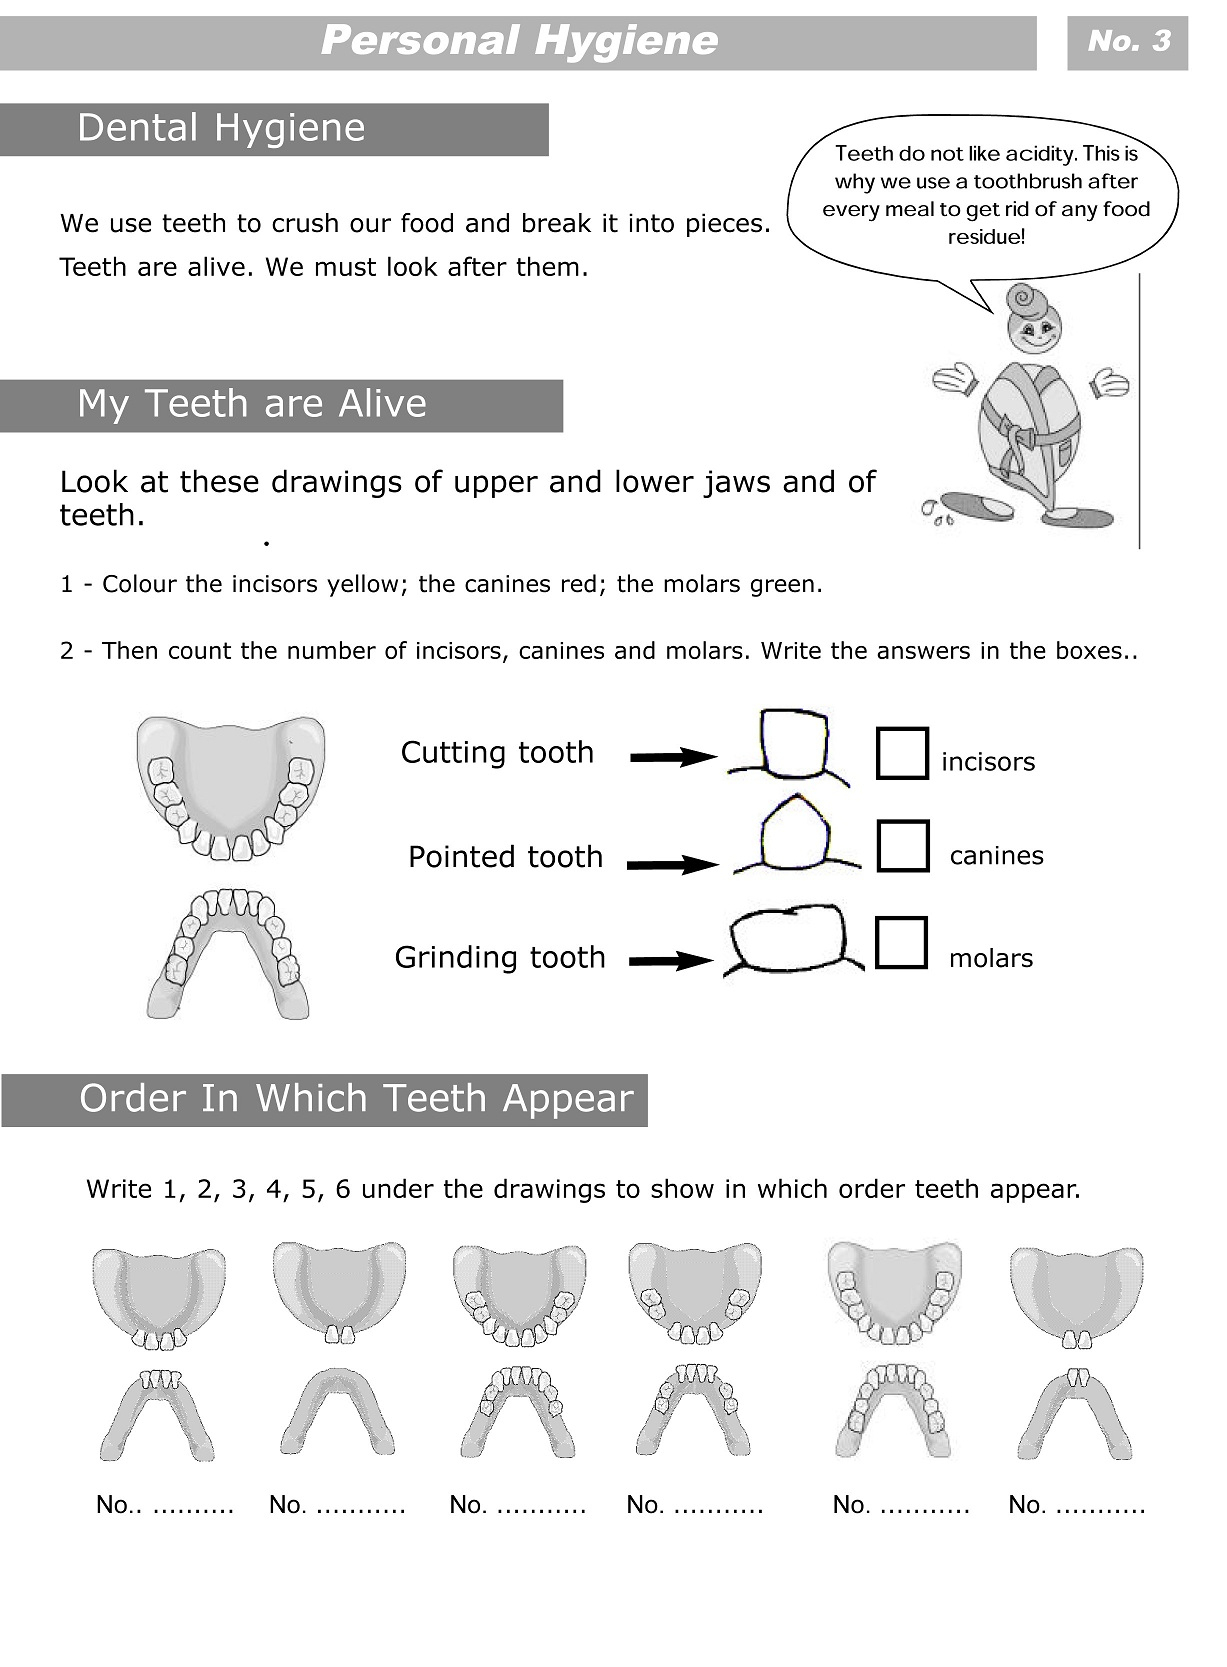 Personal Hygiene Worksheets For Kids Level 2-3 | Personal Hygiene | Dental Hygiene Printable Worksheets